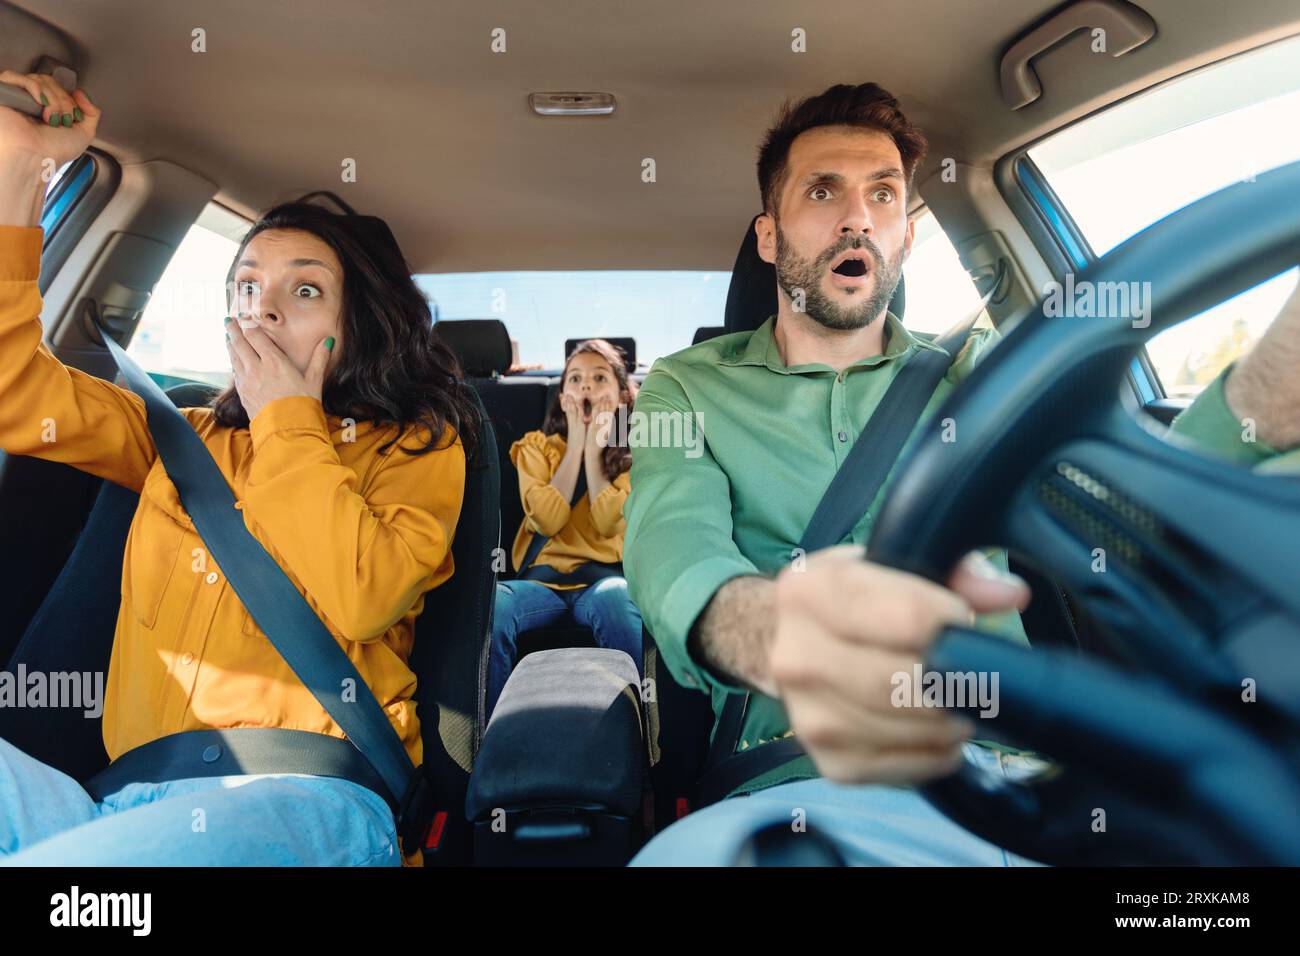 Lady driving car scared -Fotos und -Bildmaterial in hoher Auflösung – Alamy